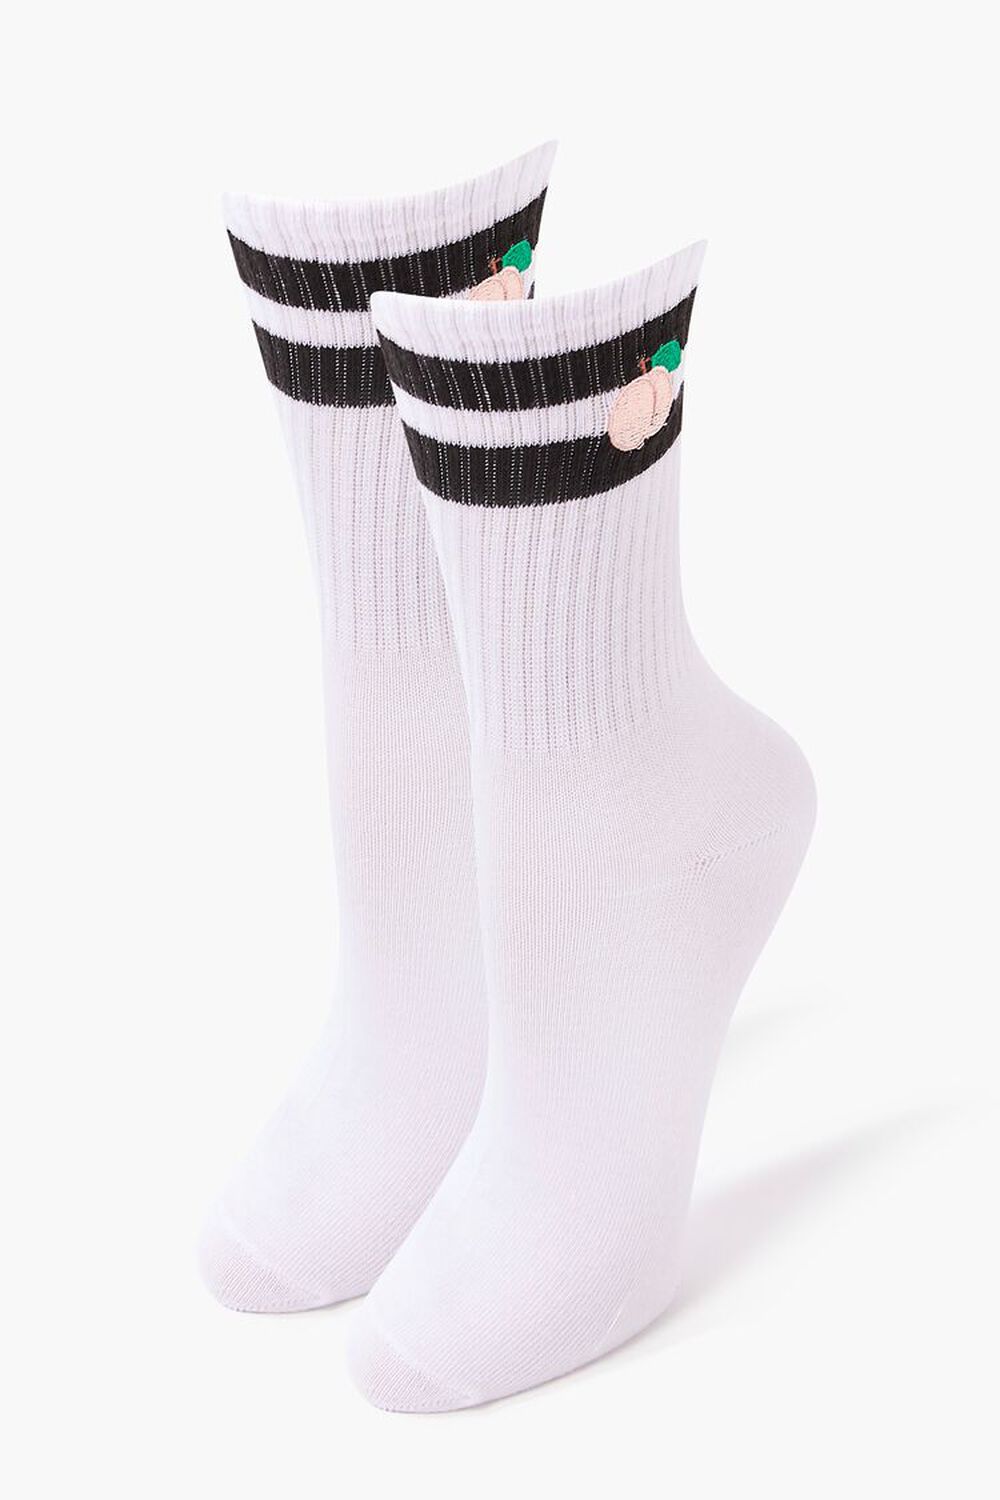 Peach Varsity-Striped Crew Socks, image 1